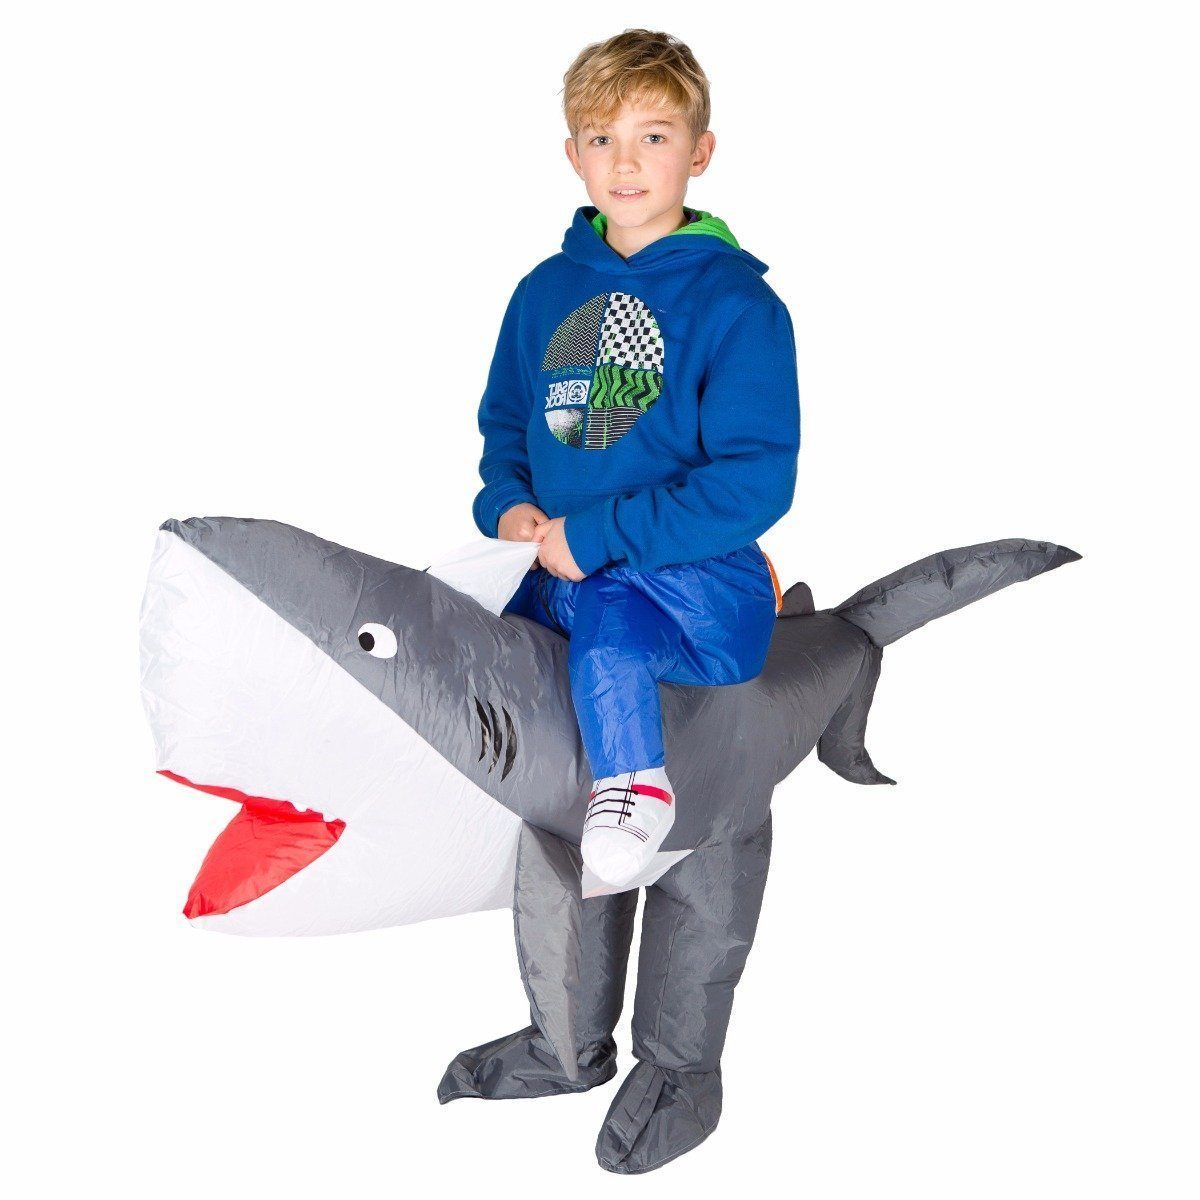 Fancy Dress - Kids Inflatable Shark Costume